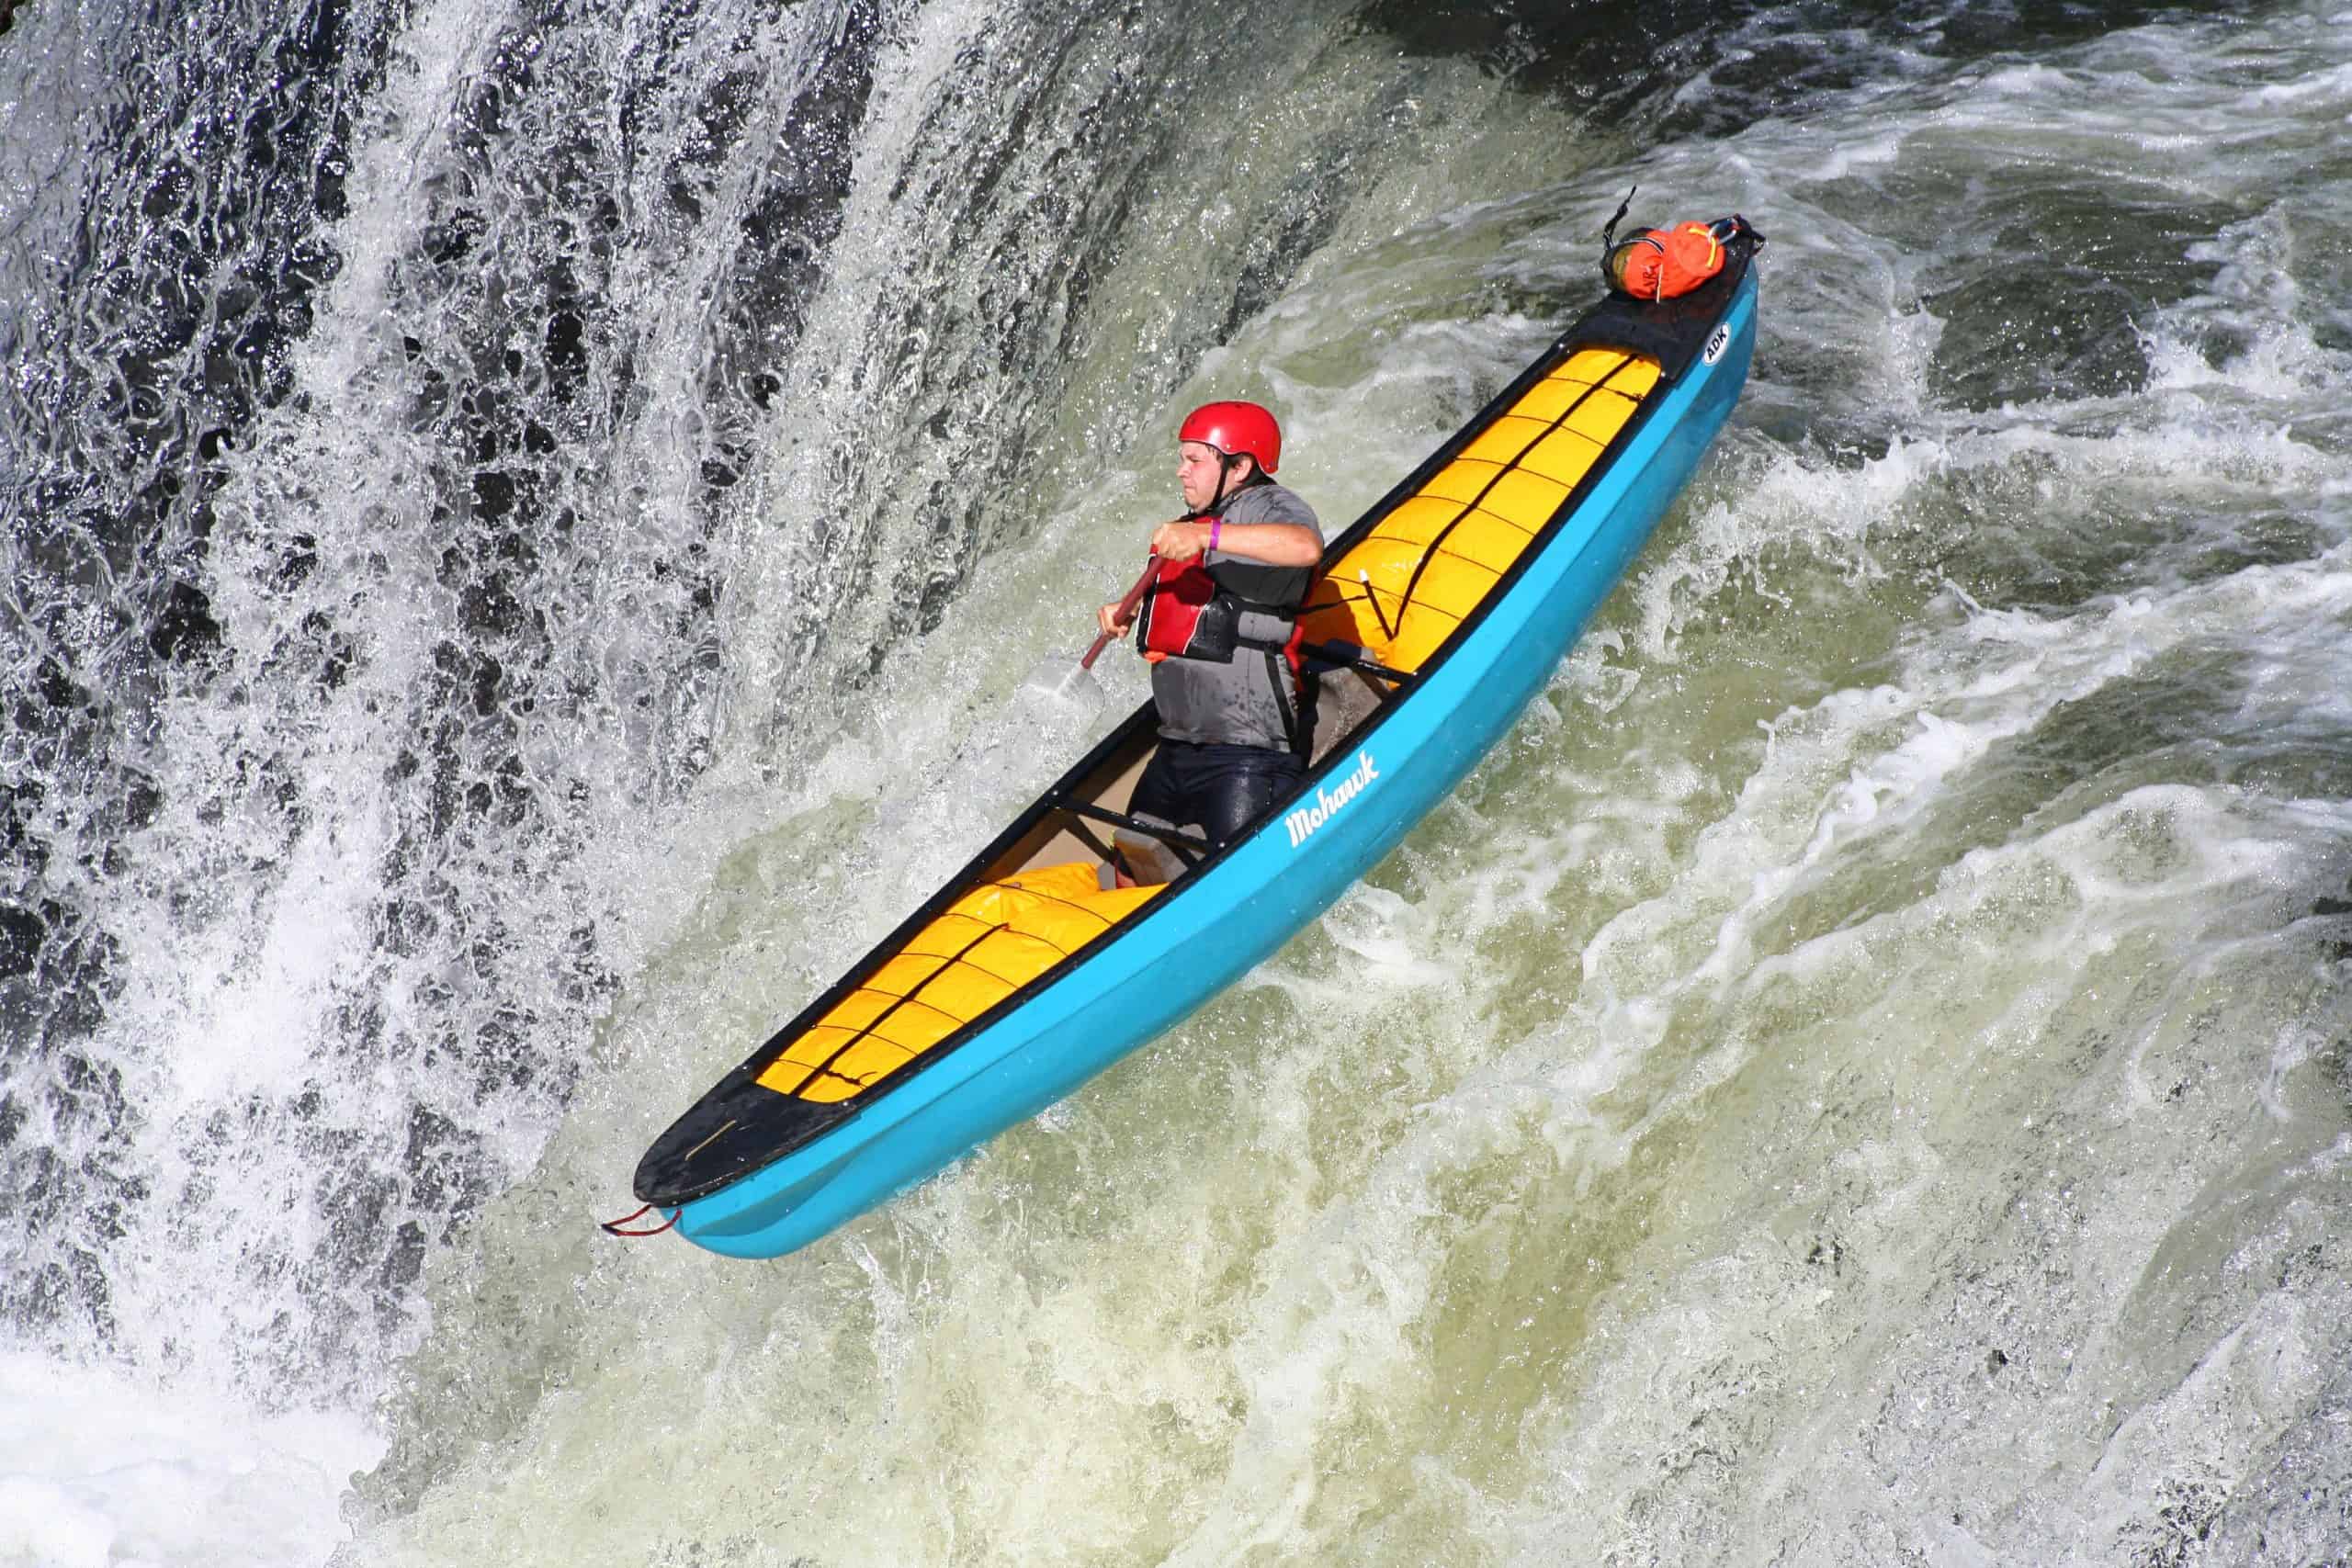 Creeking – the most extreme type of mountain kayaking